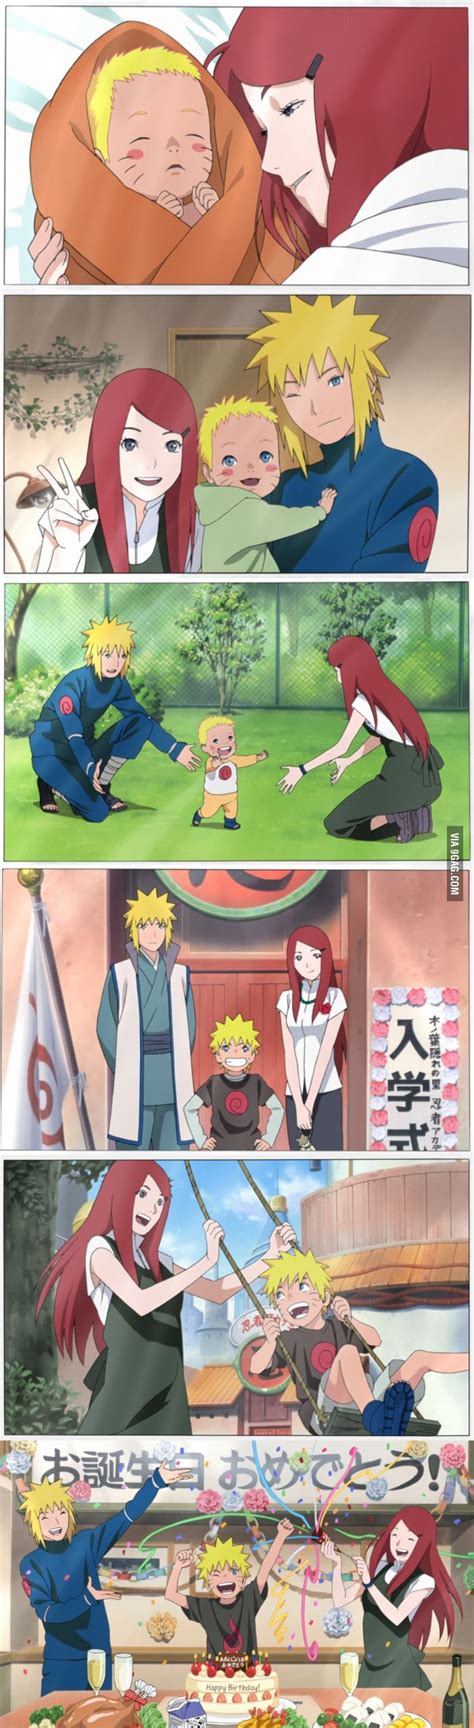 If Naruto Grew Up With His Parents 9gag Naruto Shippuden Sasuke